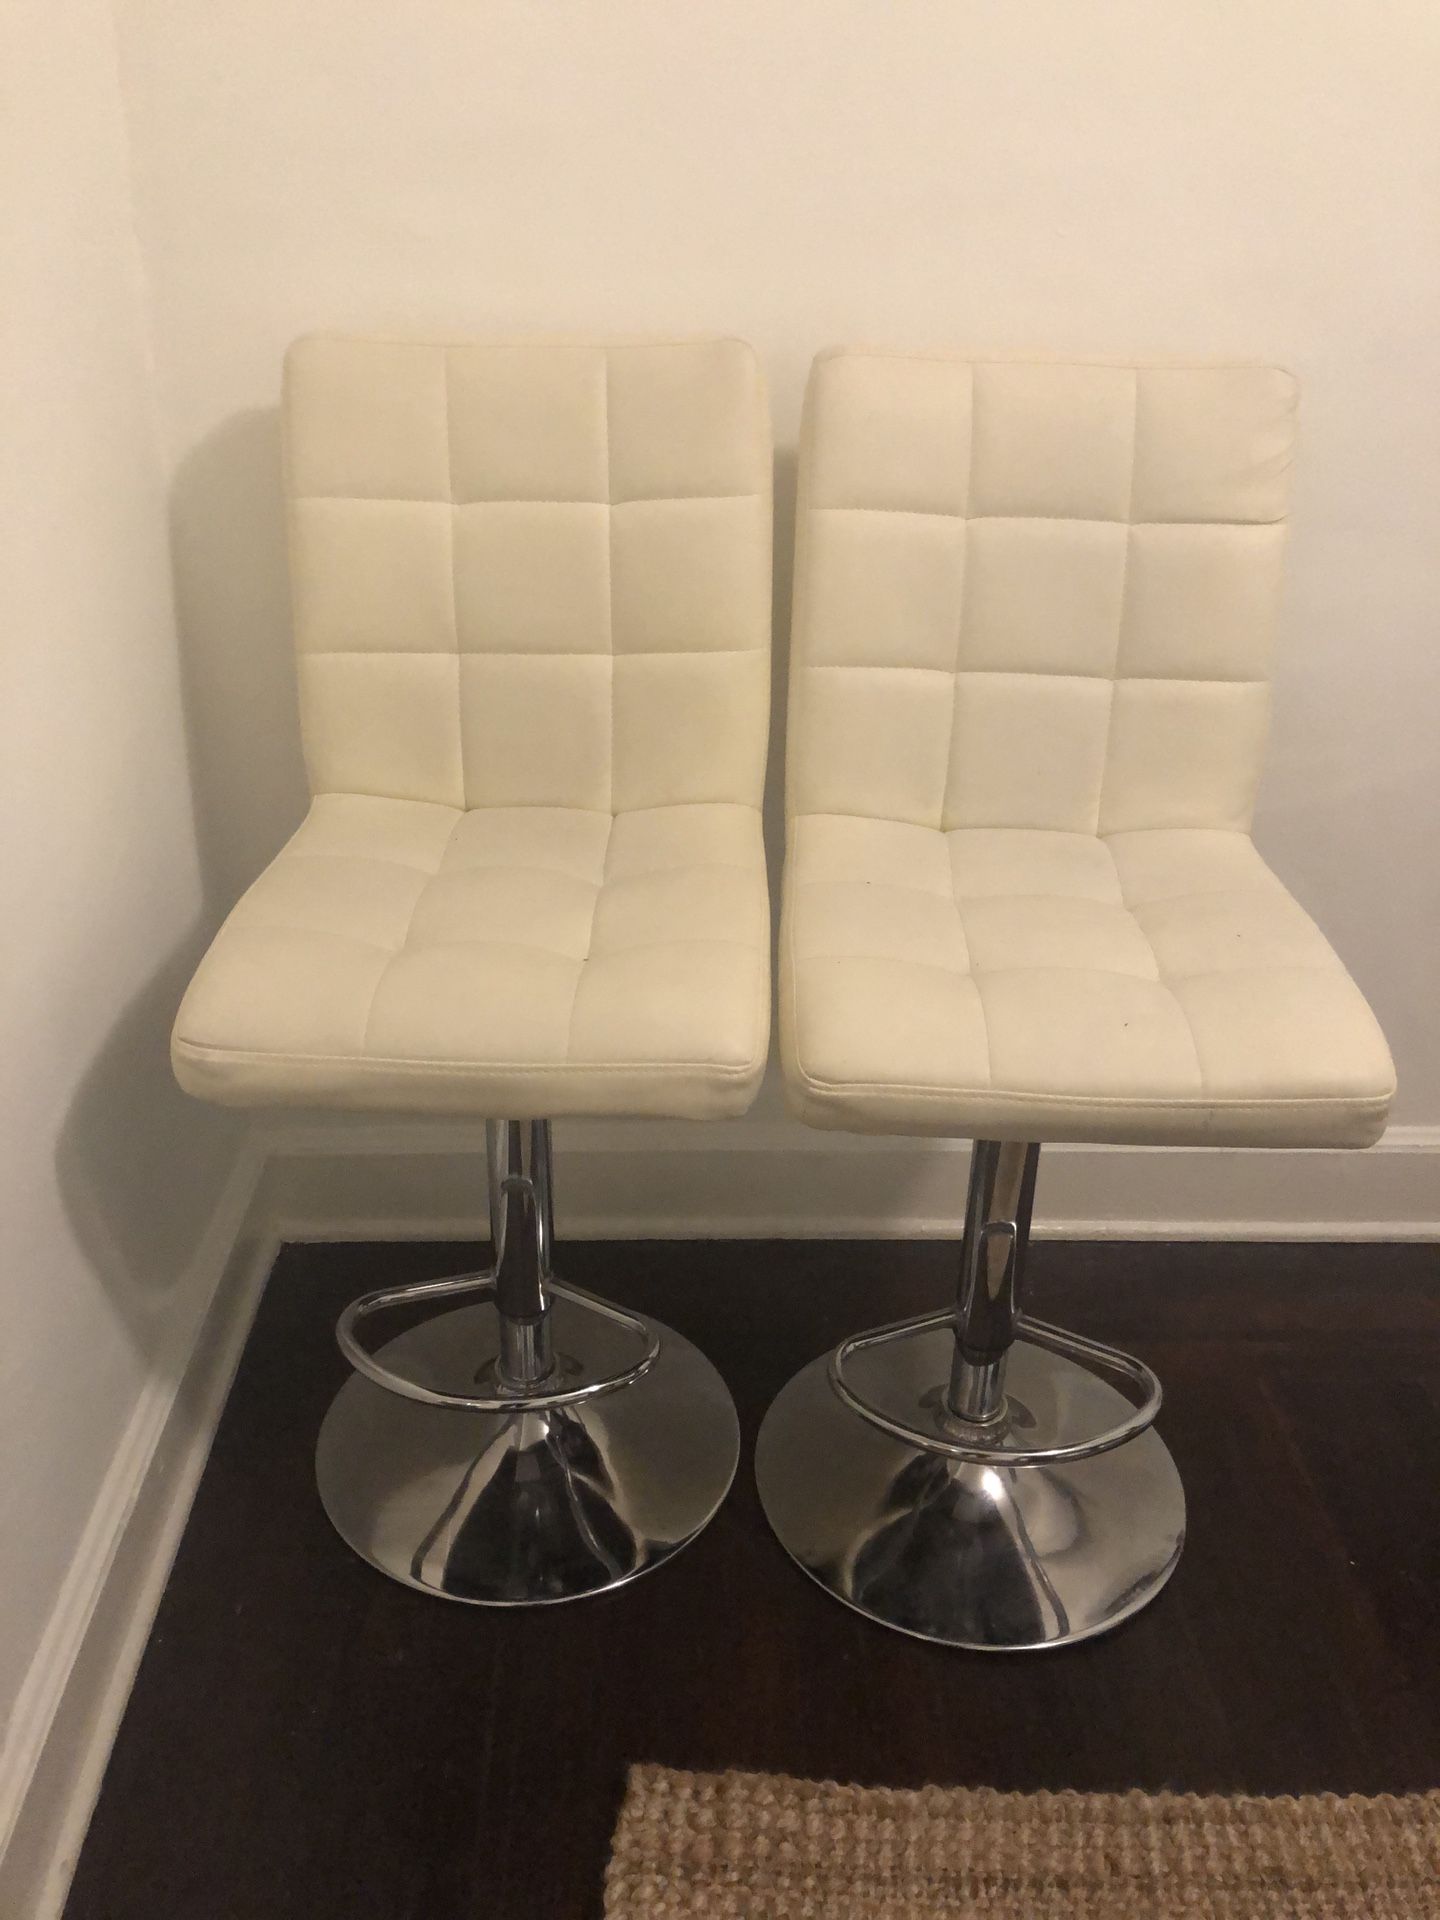 Barstool Chairs